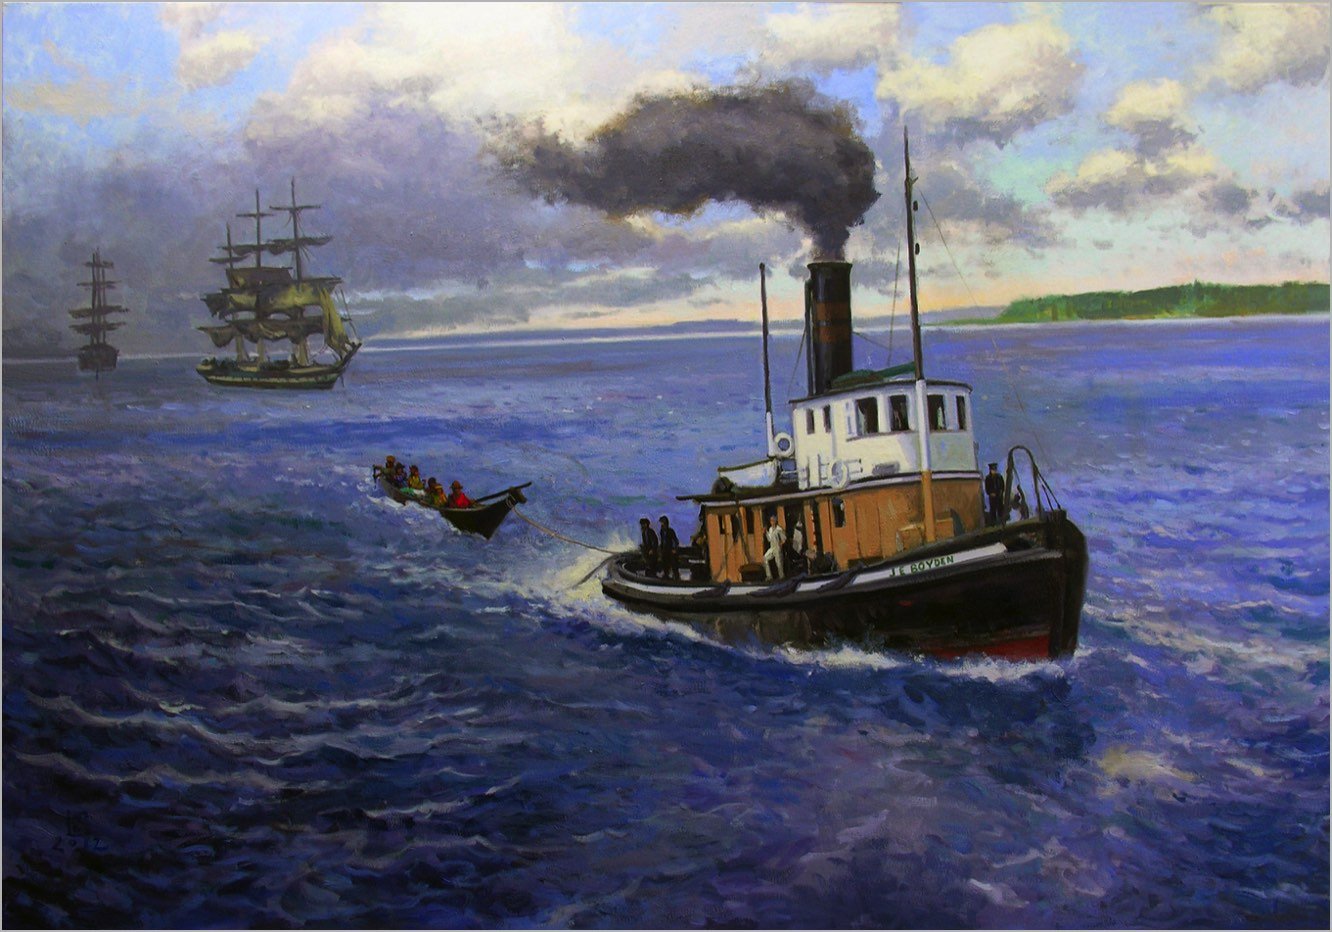 J. E. Boyden, oil on canvas, 42 x 60 inches, copyright ©2012